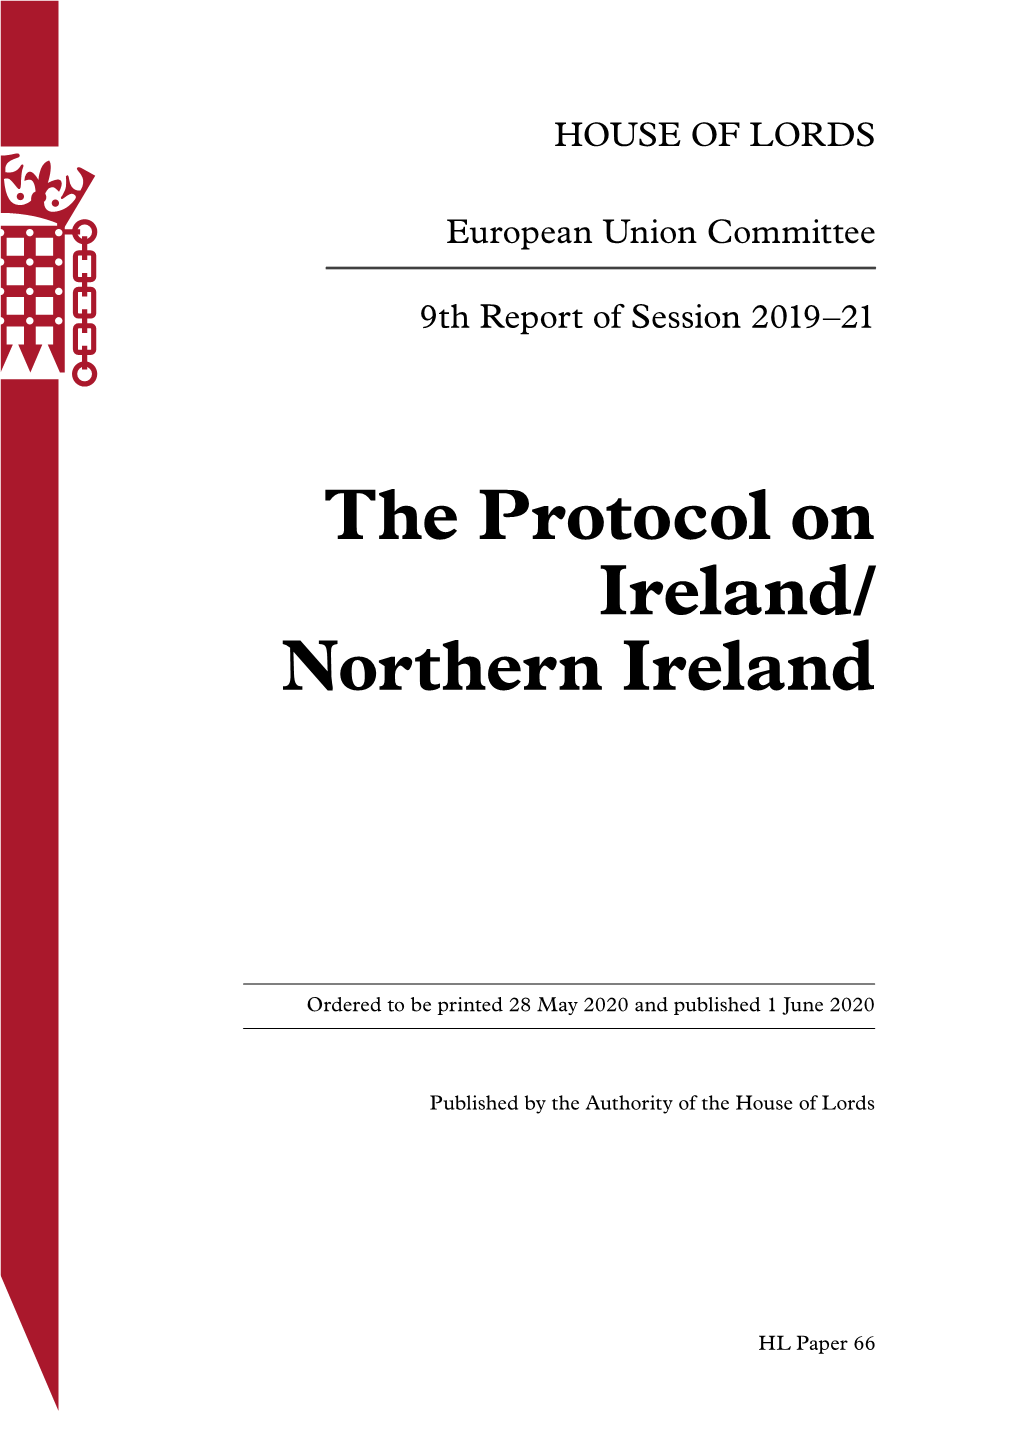 The Protocol on Ireland/Northern Ireland